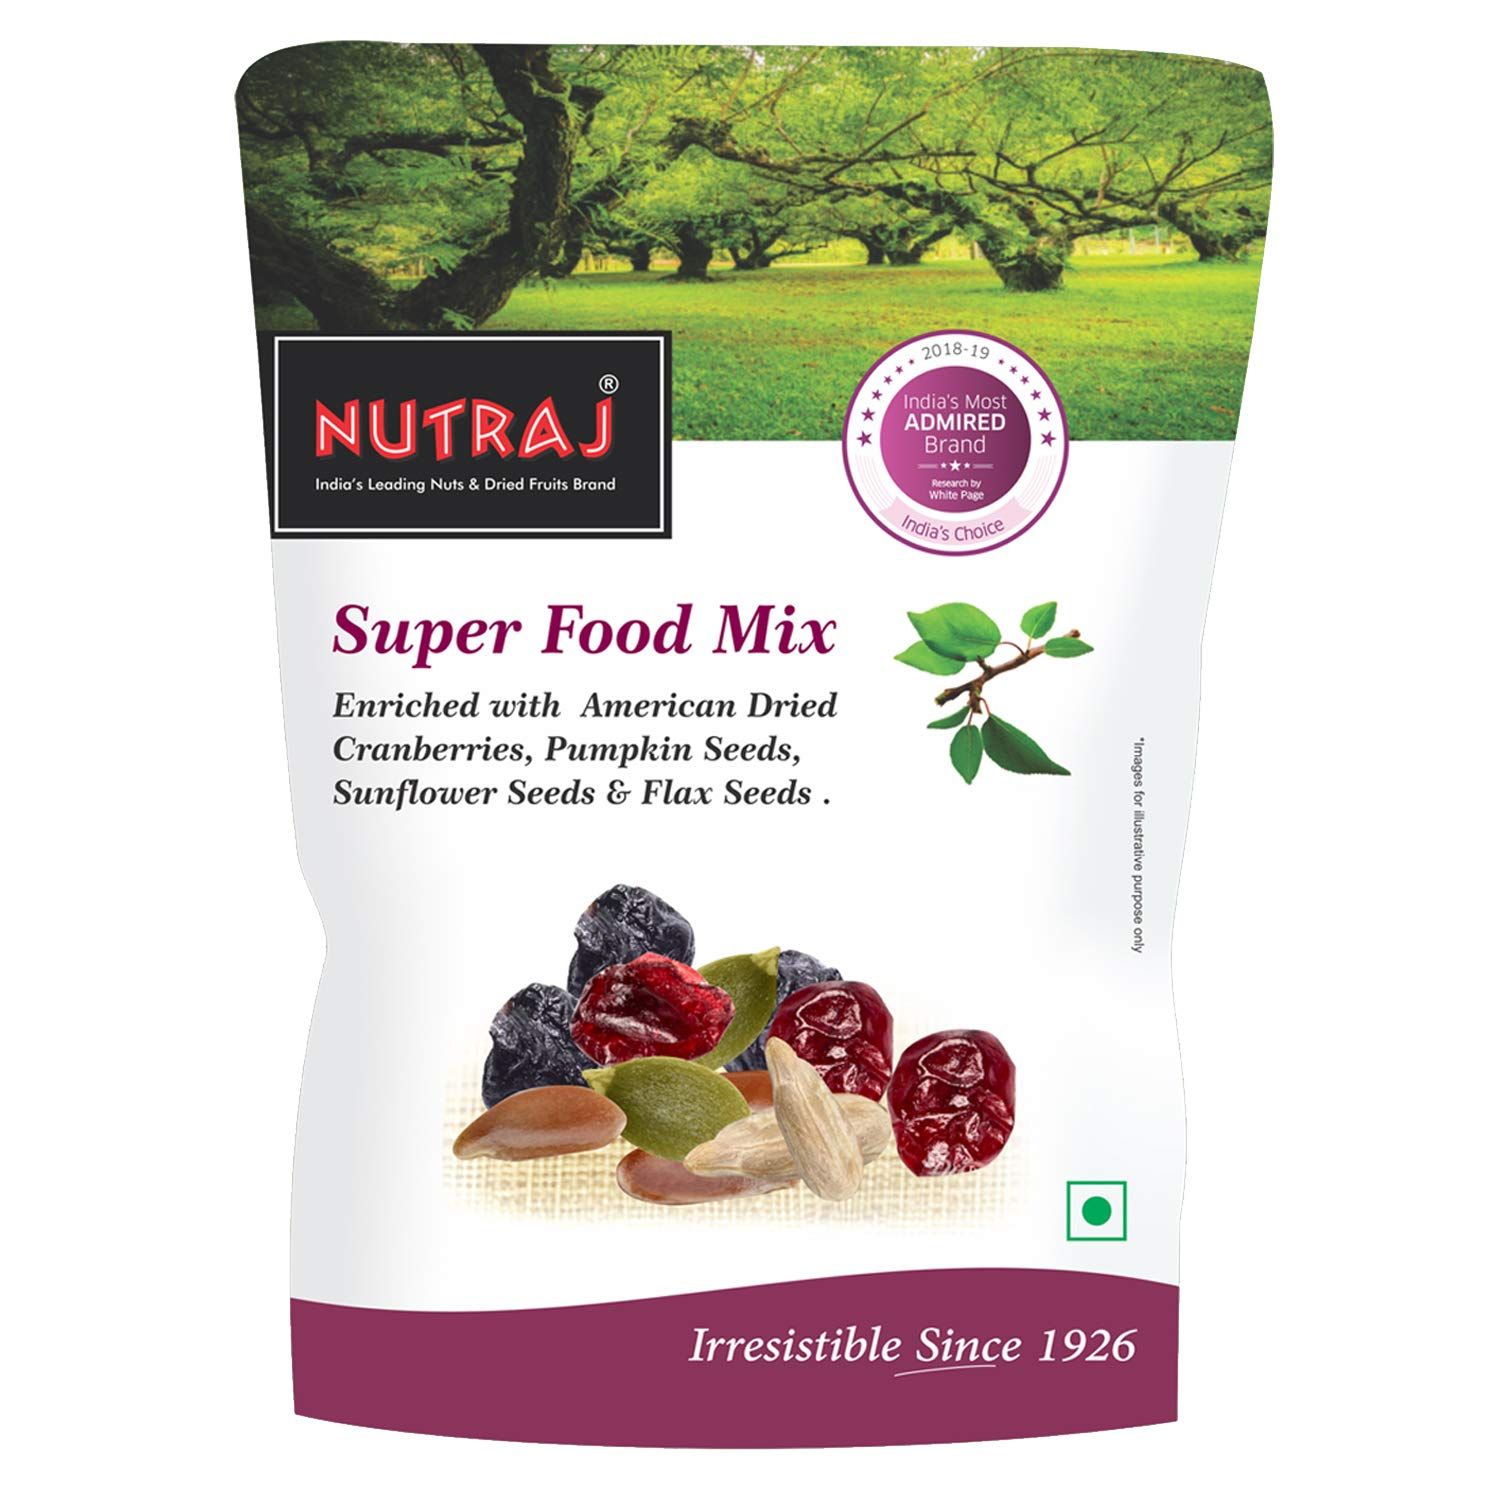 Nutraj Super Food Mix Image